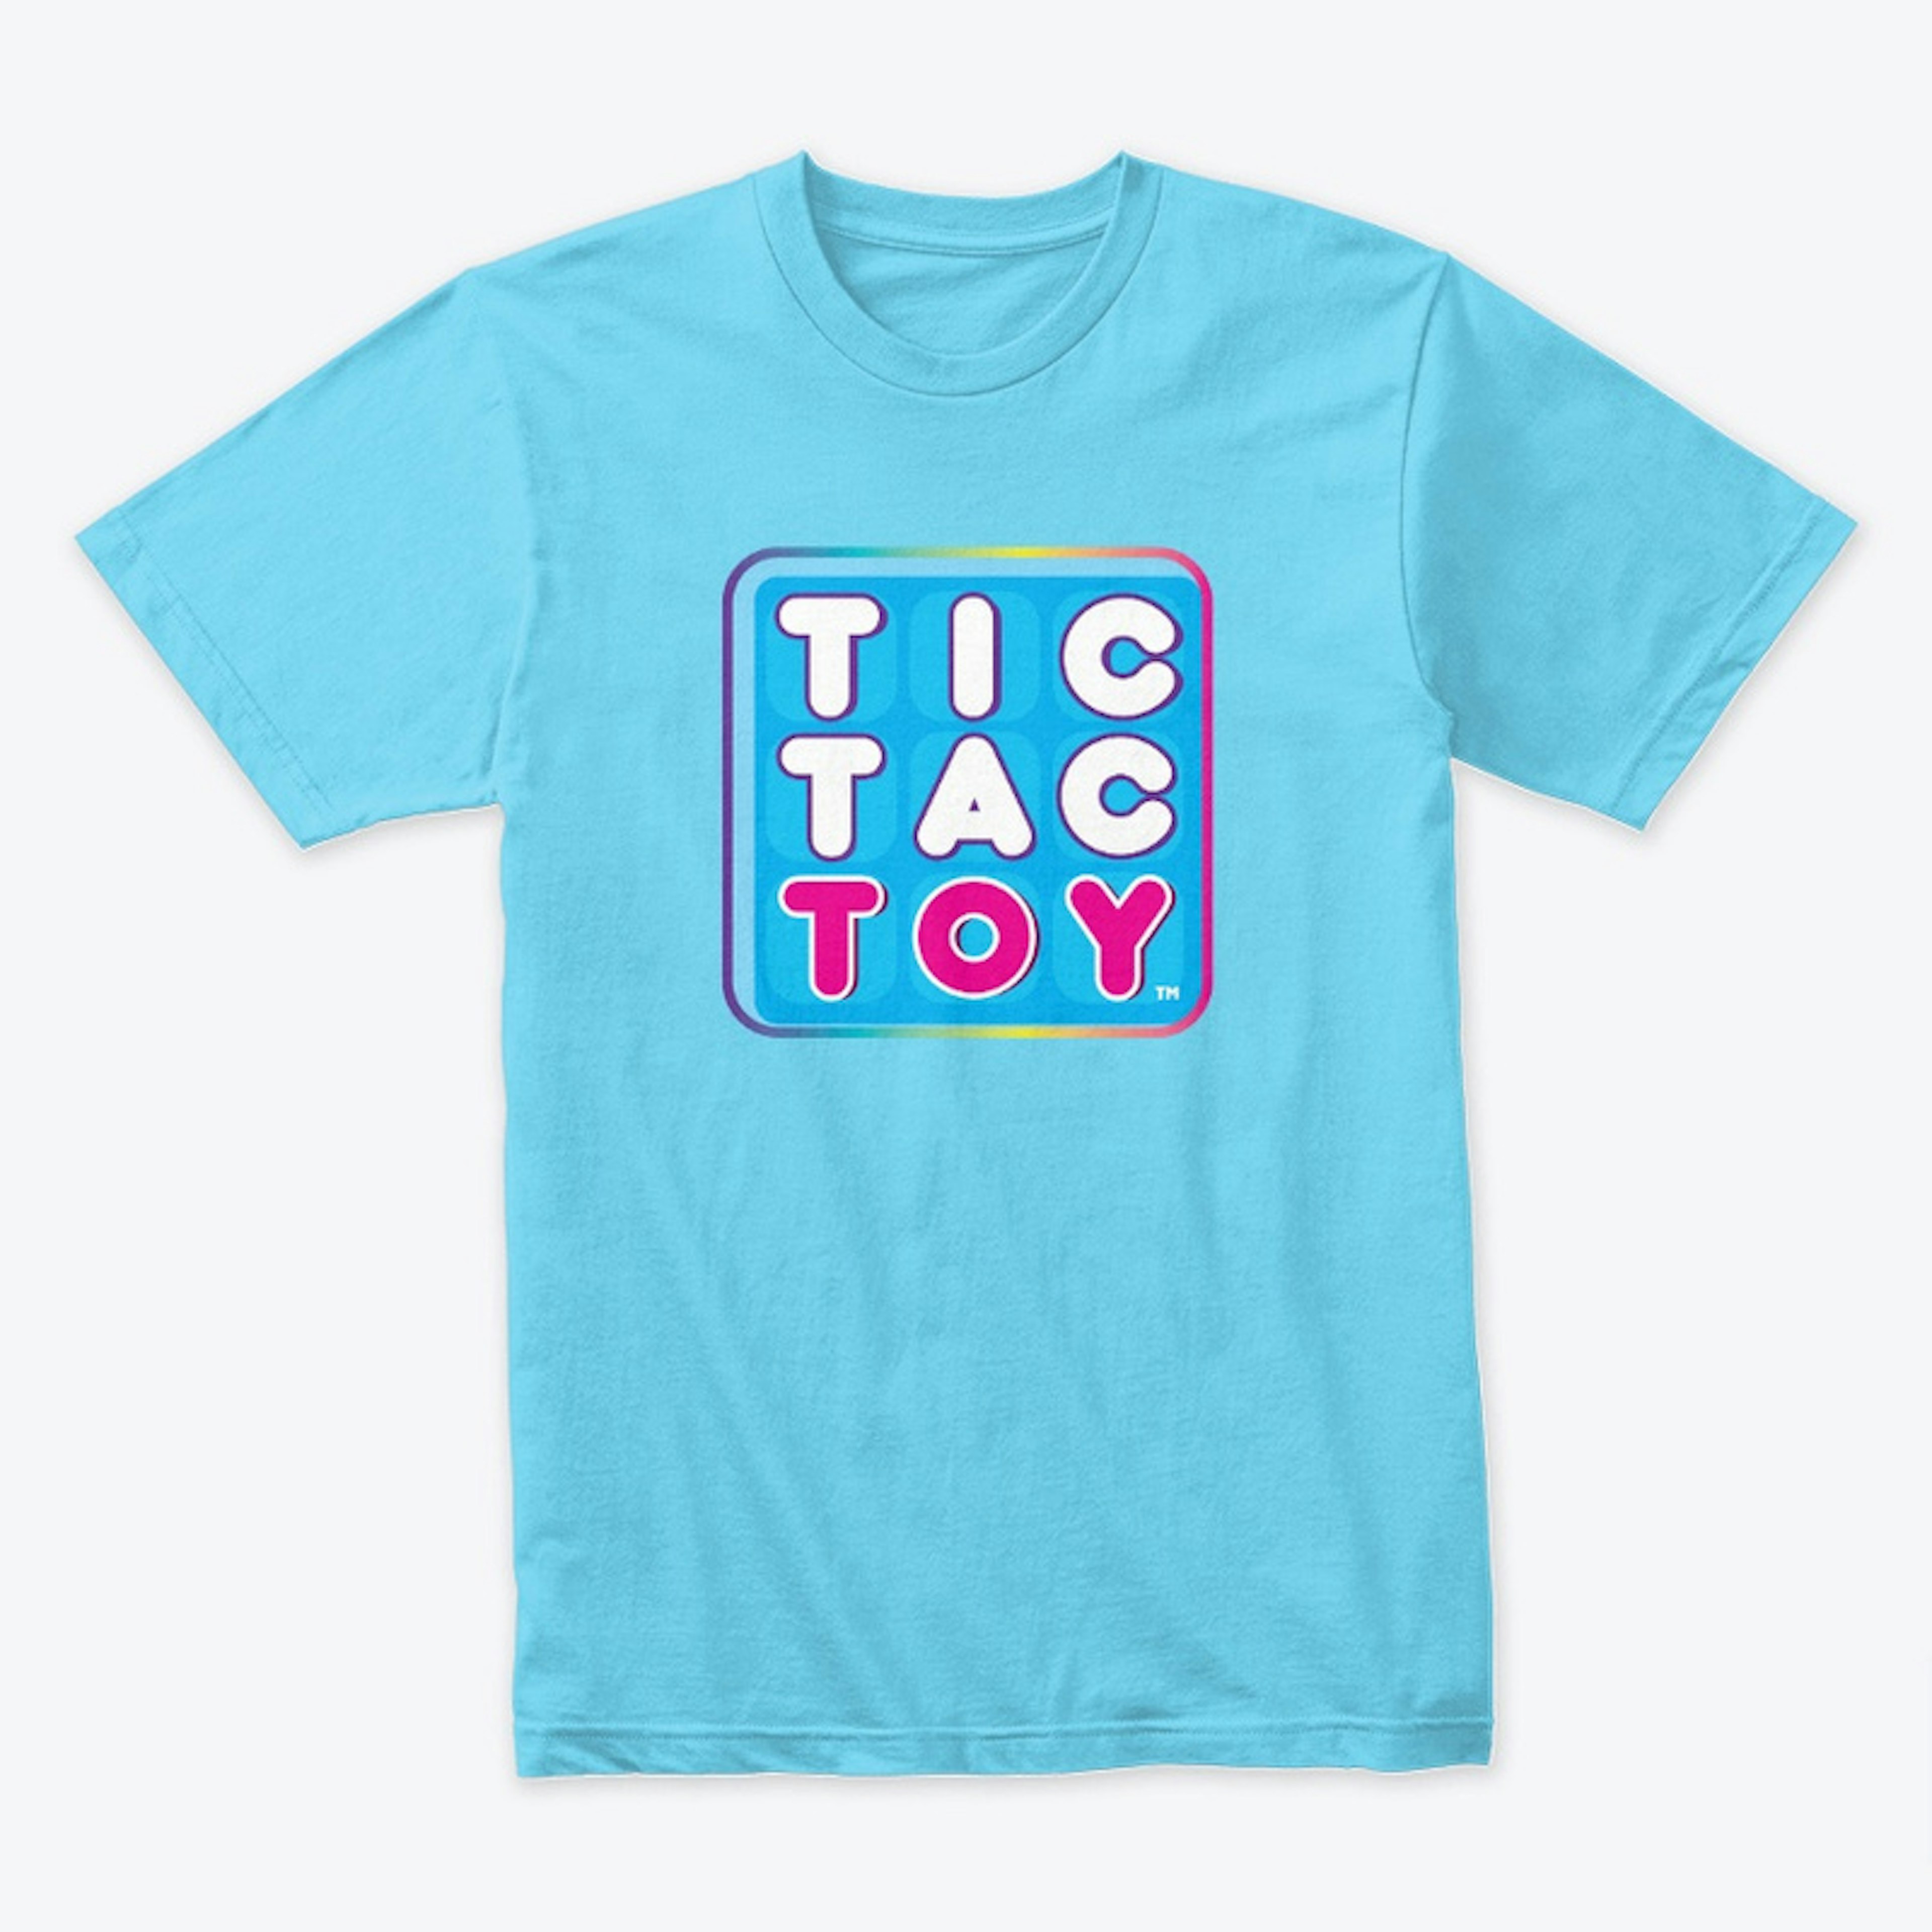 Tic Tac Toy Shirt (Adult Sizes)